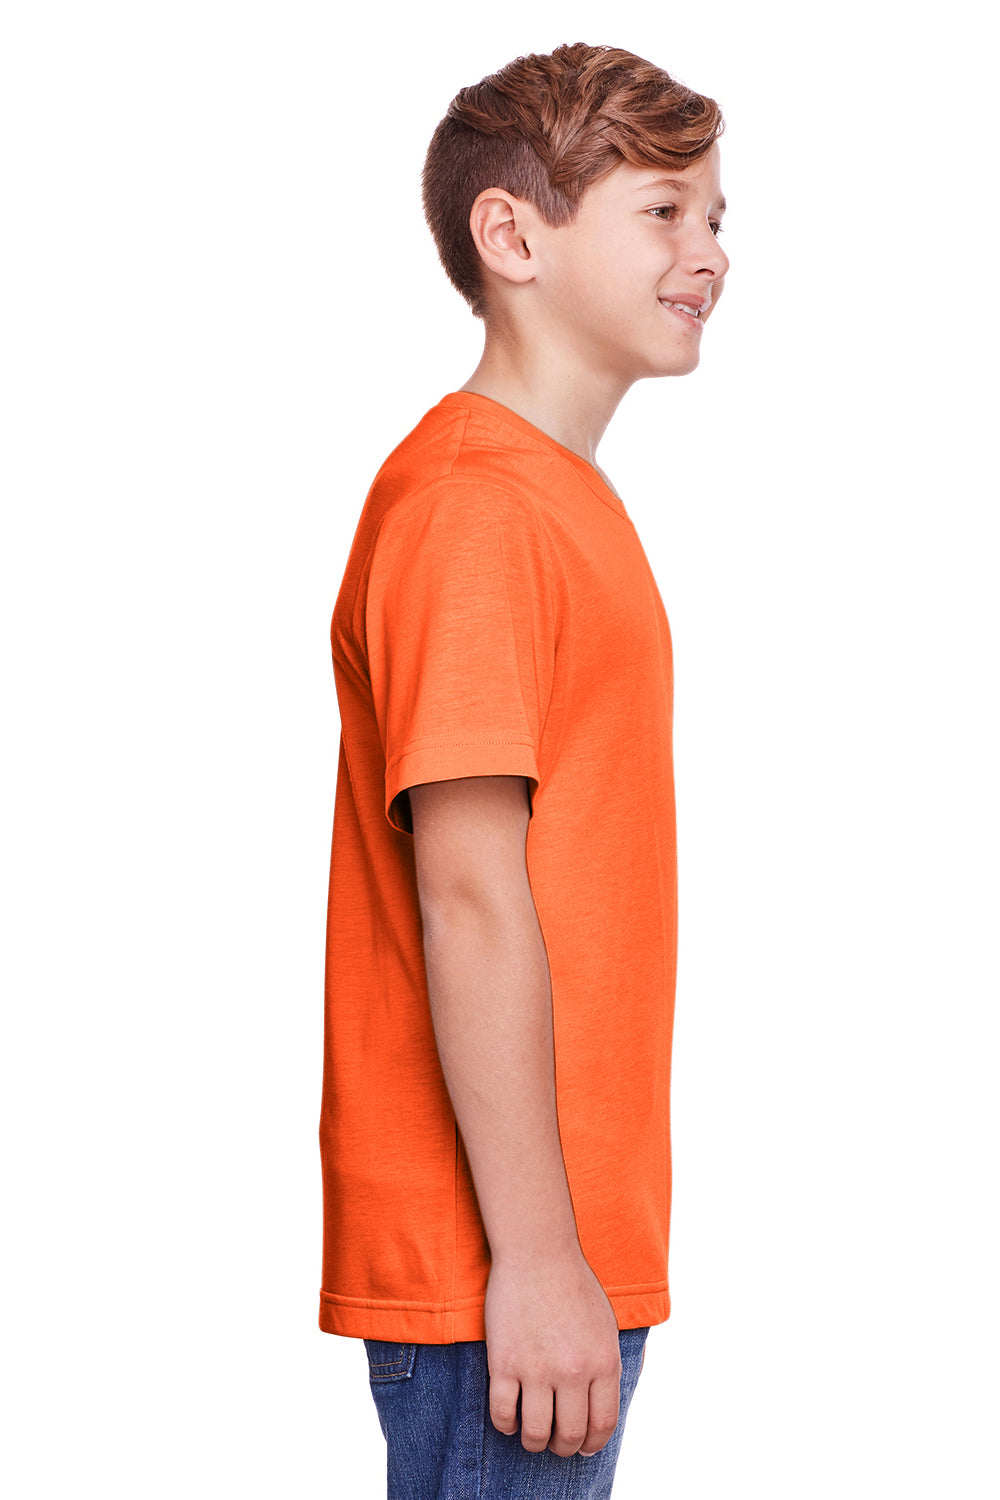 Core 365 CE111Y Youth Fusion ChromaSoft Performance Moisture Wicking Short Sleeve Crewneck T-Shirt Orange Side